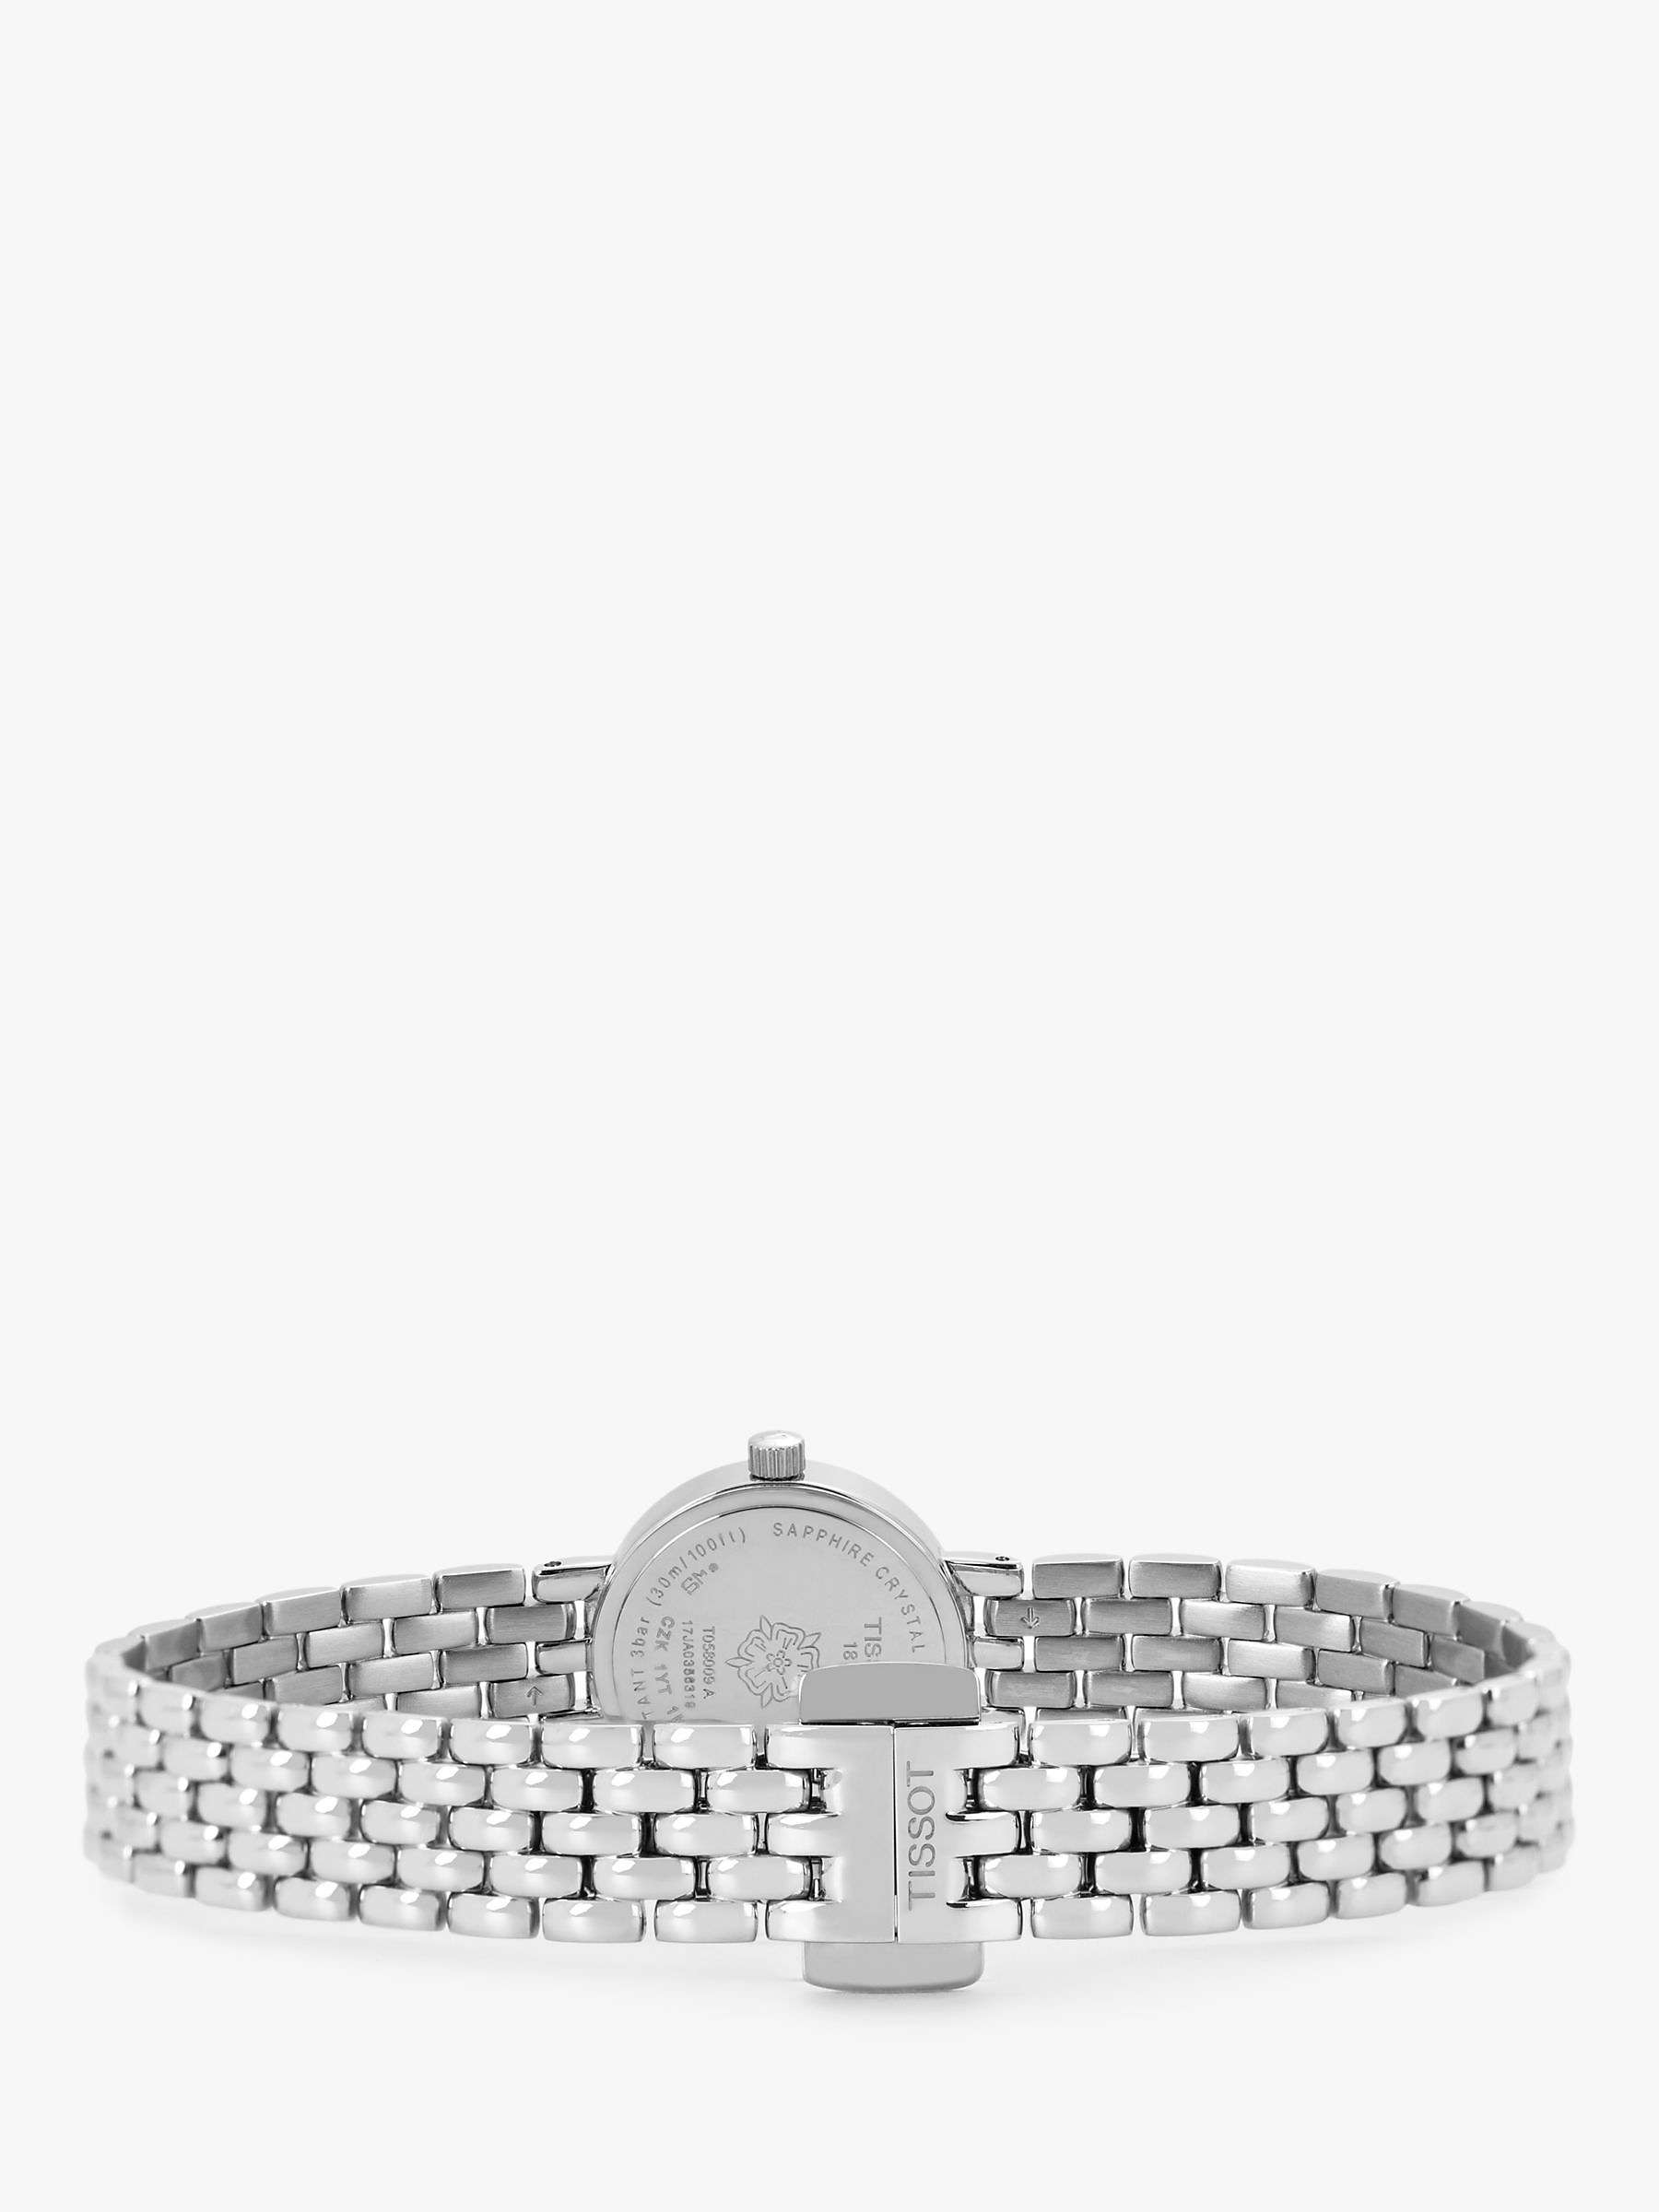 Buy Tissot T0580091103100 Women's Lovely Bracelet Strap Watch, Silver Online at johnlewis.com